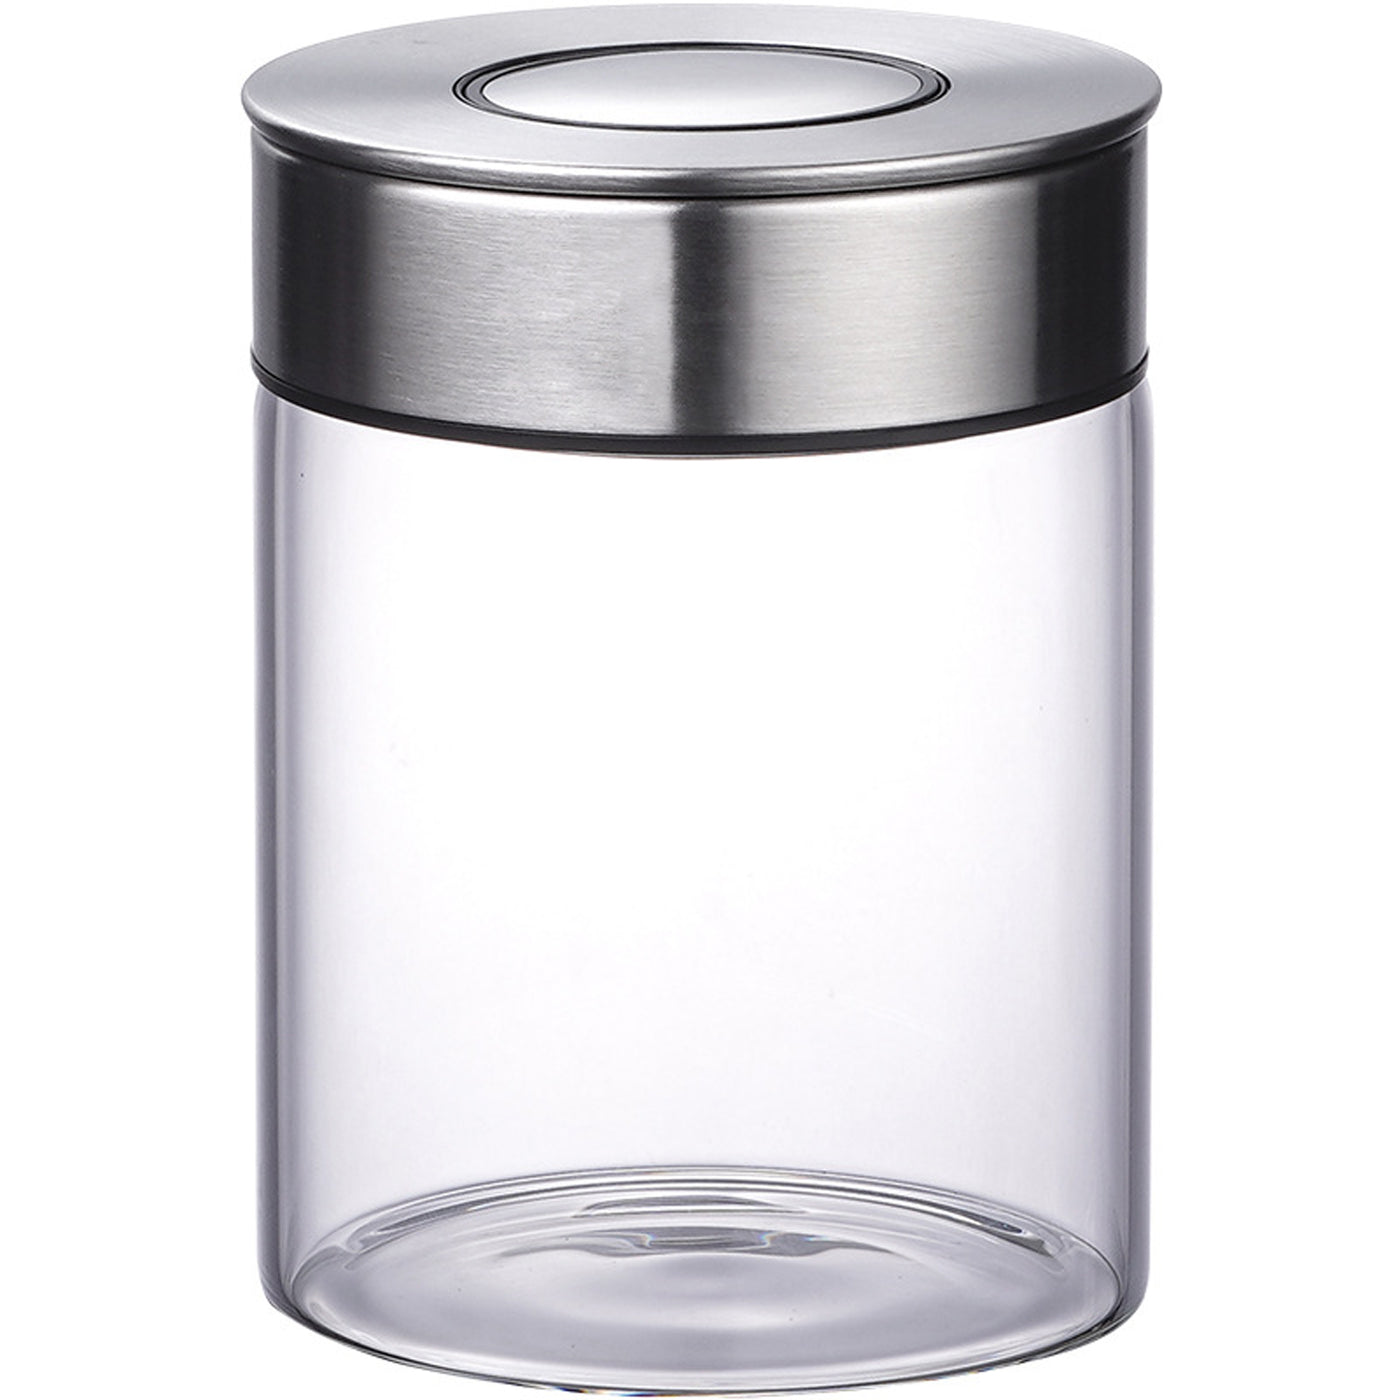 1pc Glass Storage Jar With Wooden Lid, Candy Jar With Lid, Sealed  Borosilicate Glass Jar For Coffee Bean, Loose Leaf Tea, Nuts, Sugar,  Spices, Kitchen Accessories, 450ml /16oz,750ml  /26oz,1000ml/34oz,1500ml/51oz